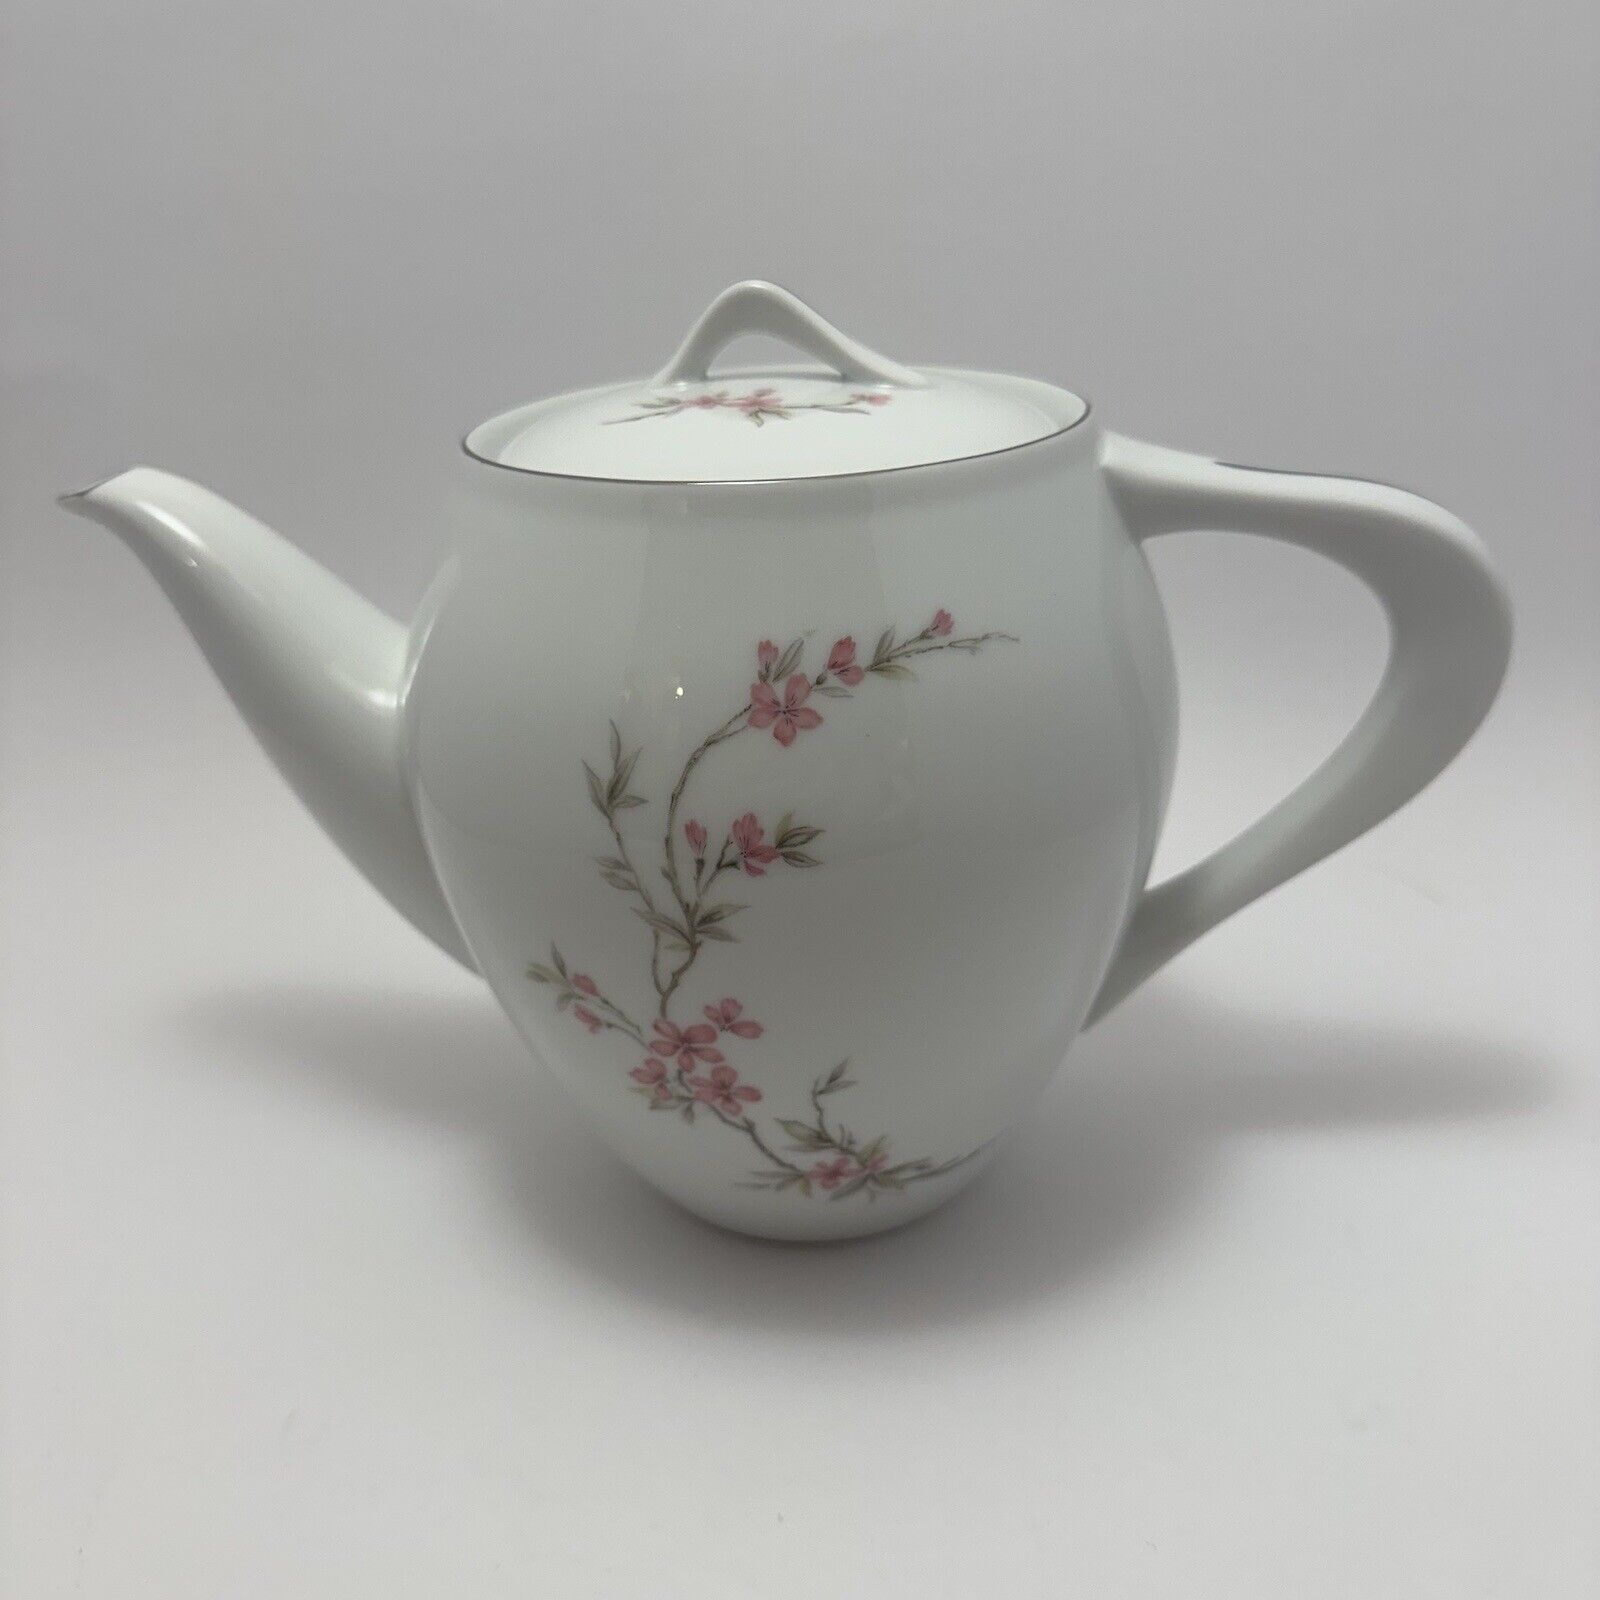 Vintage Three Crown China Teapot w/Lid - Floral Design - Silver Trim - Beautiful